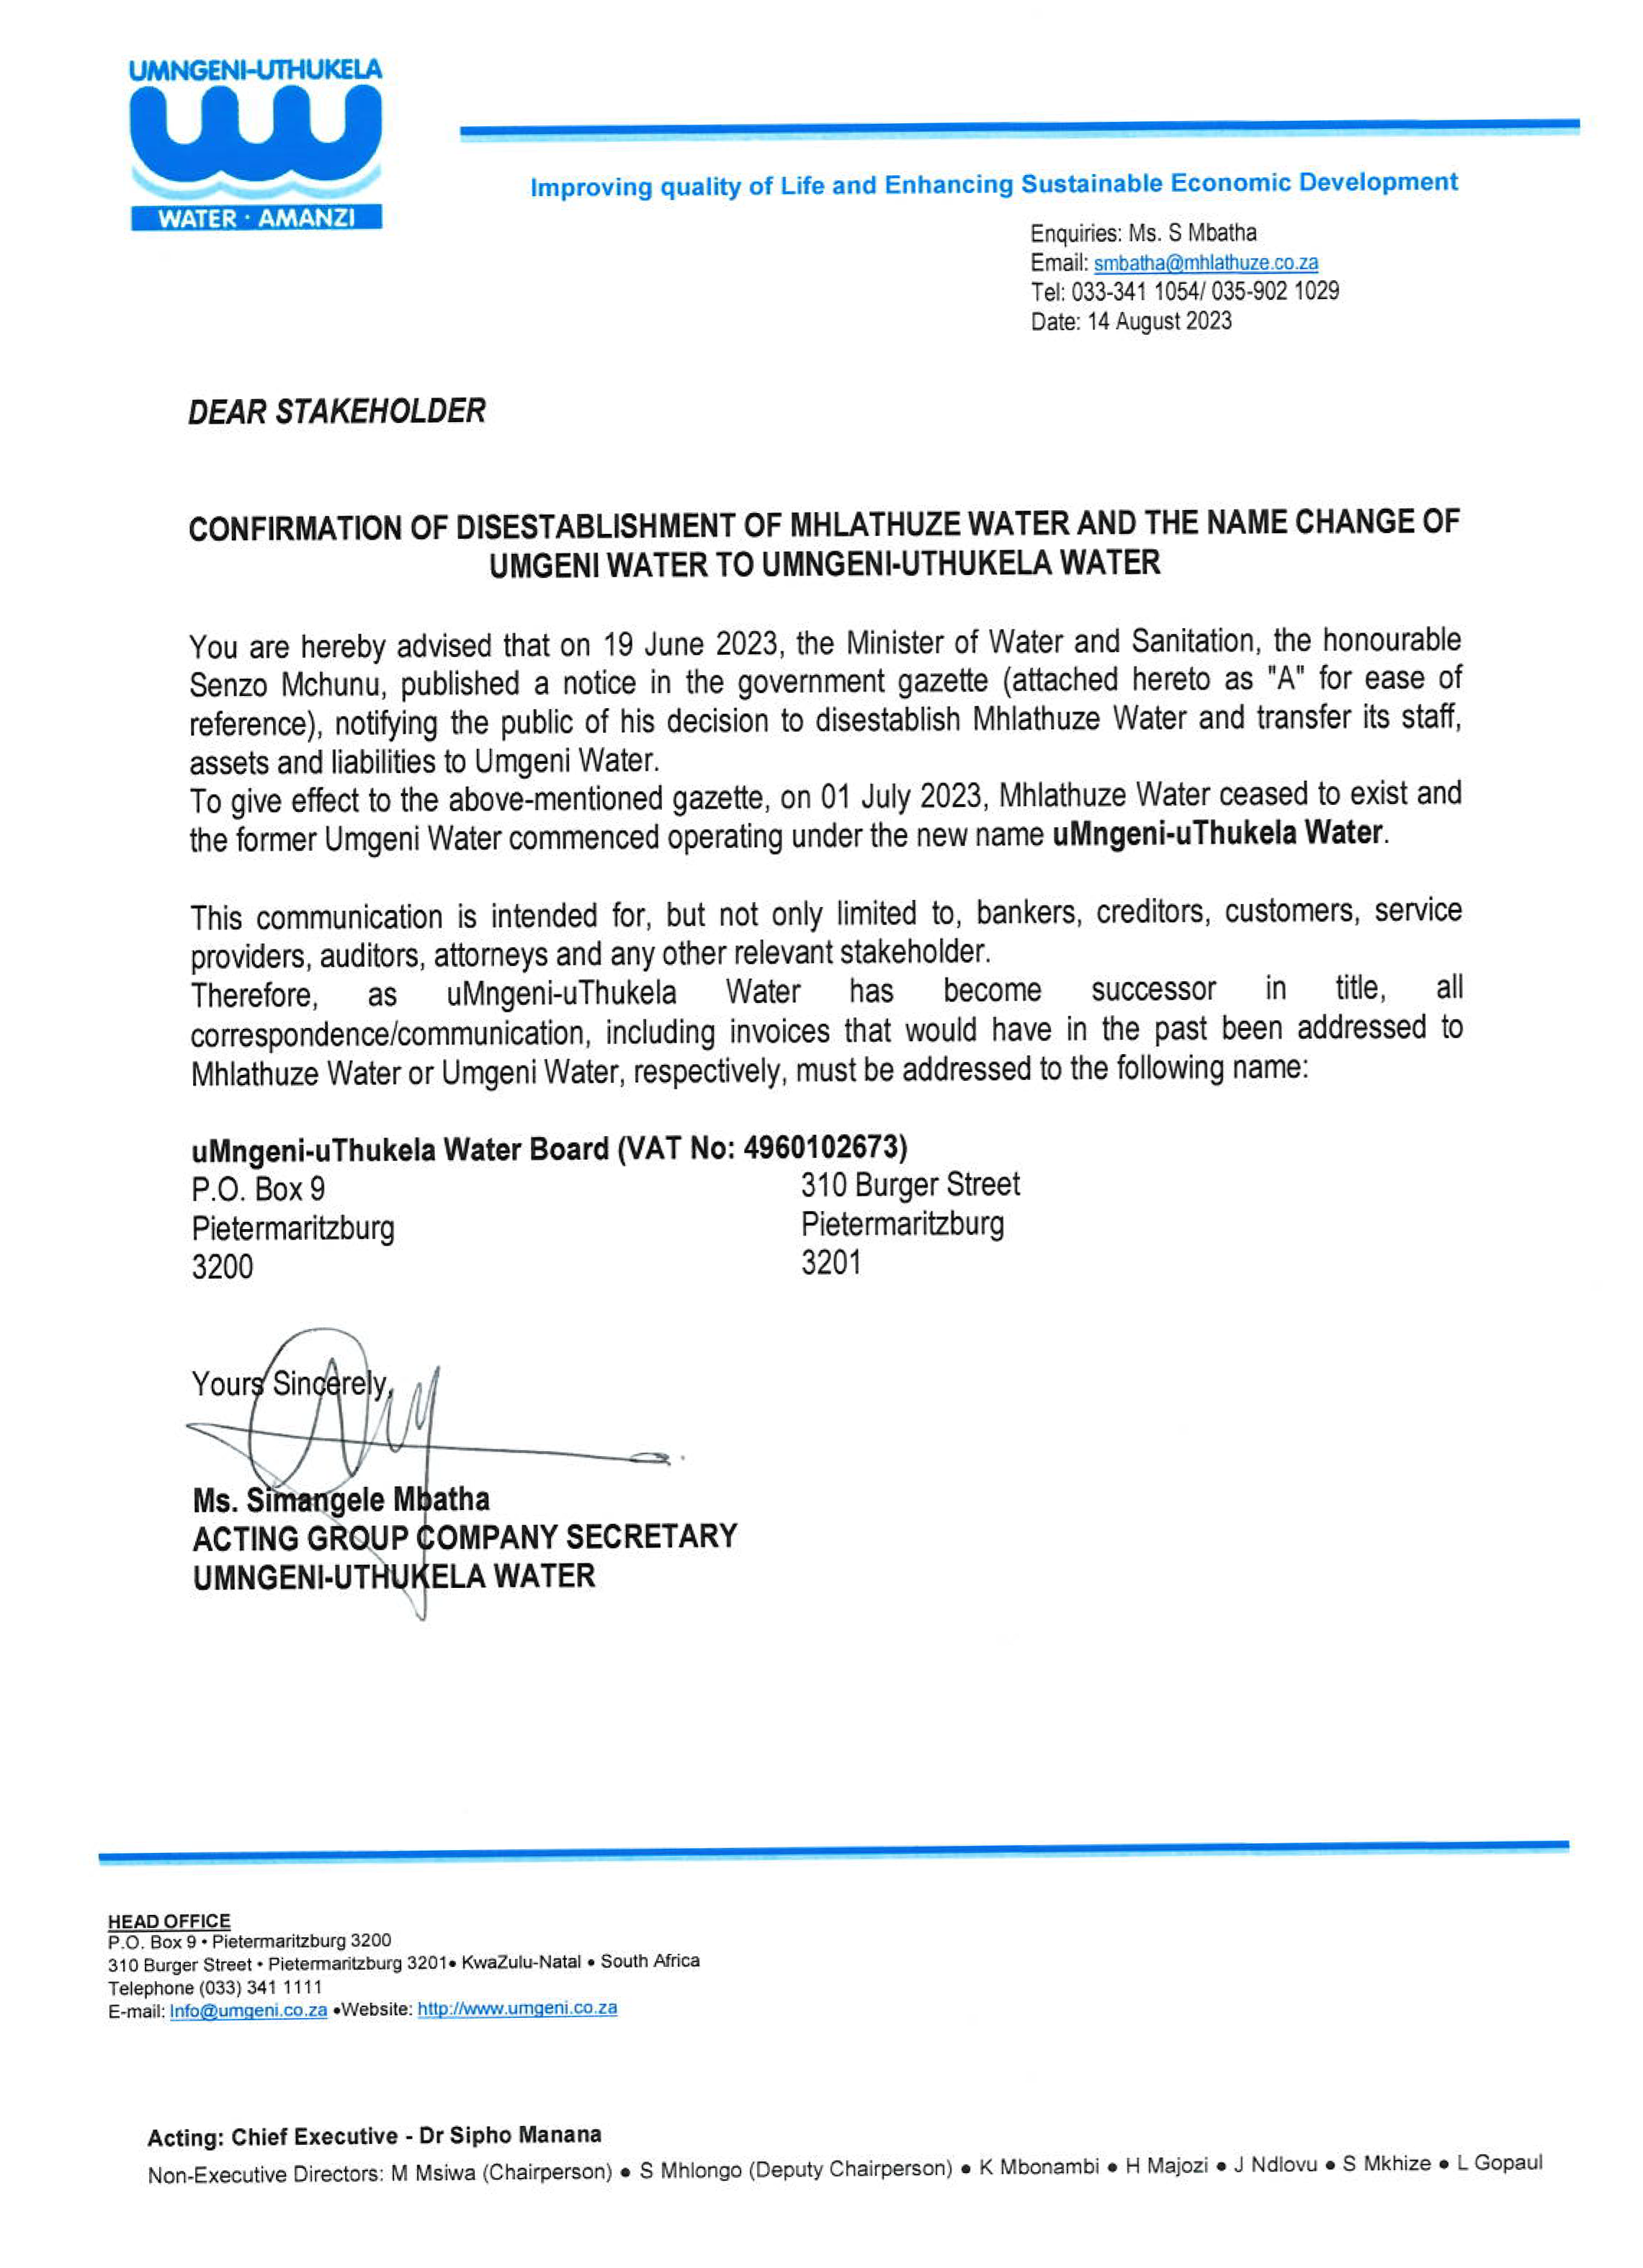 Confirmation of disestablishment of Mhlathuze Water and the name change of uMngeni-uThukela Water to uMngeni-uThukela Water